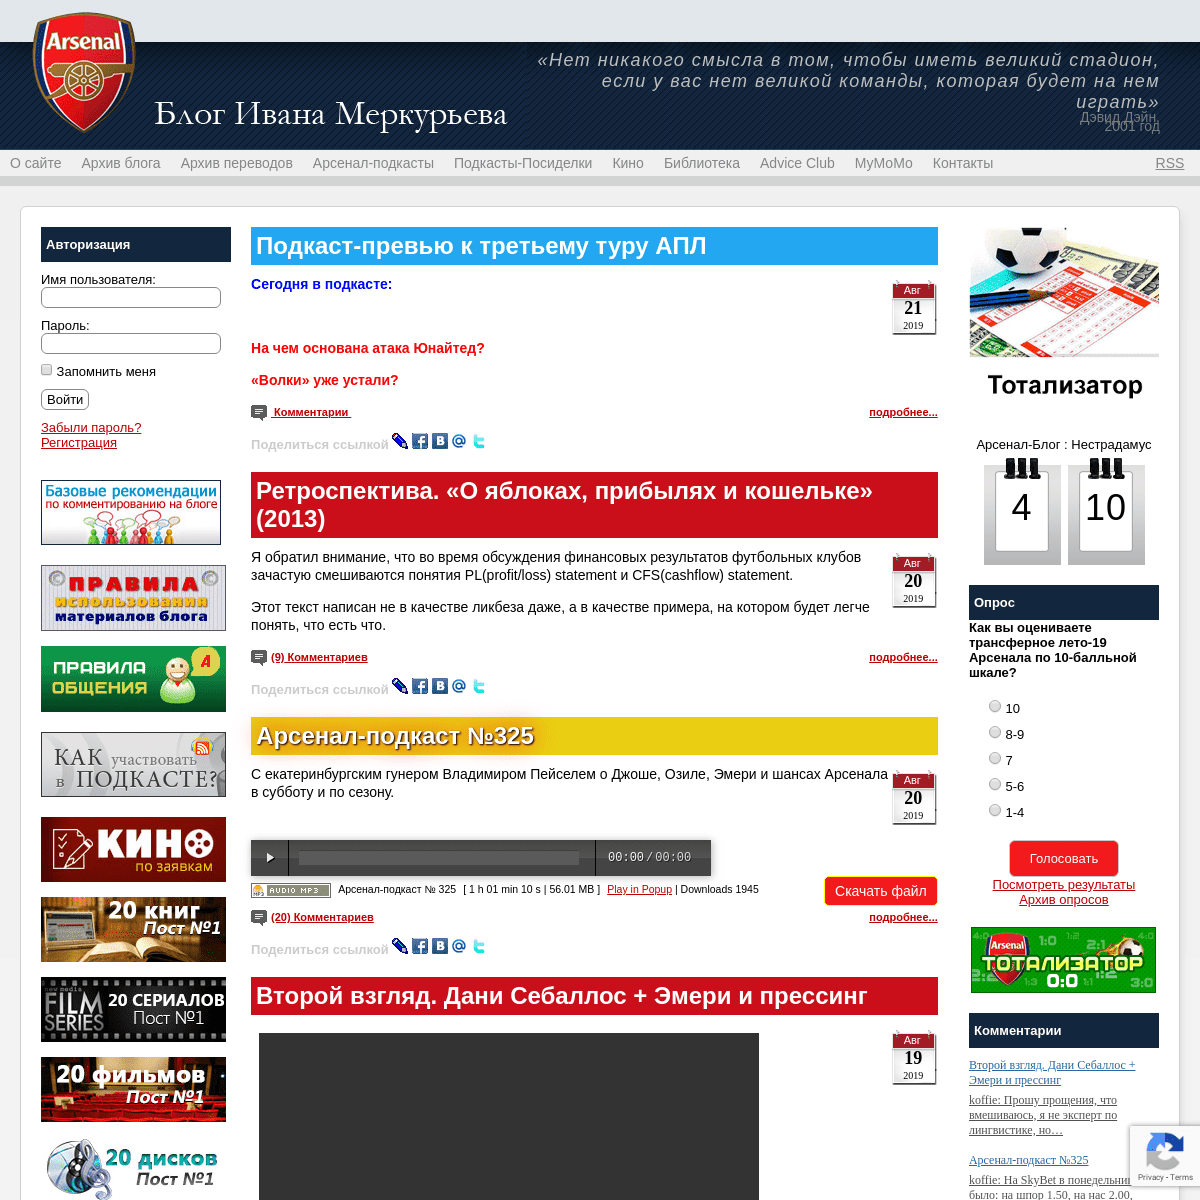 блог Ивана Меркурьева - Блог о футбольном клубе Arsenal